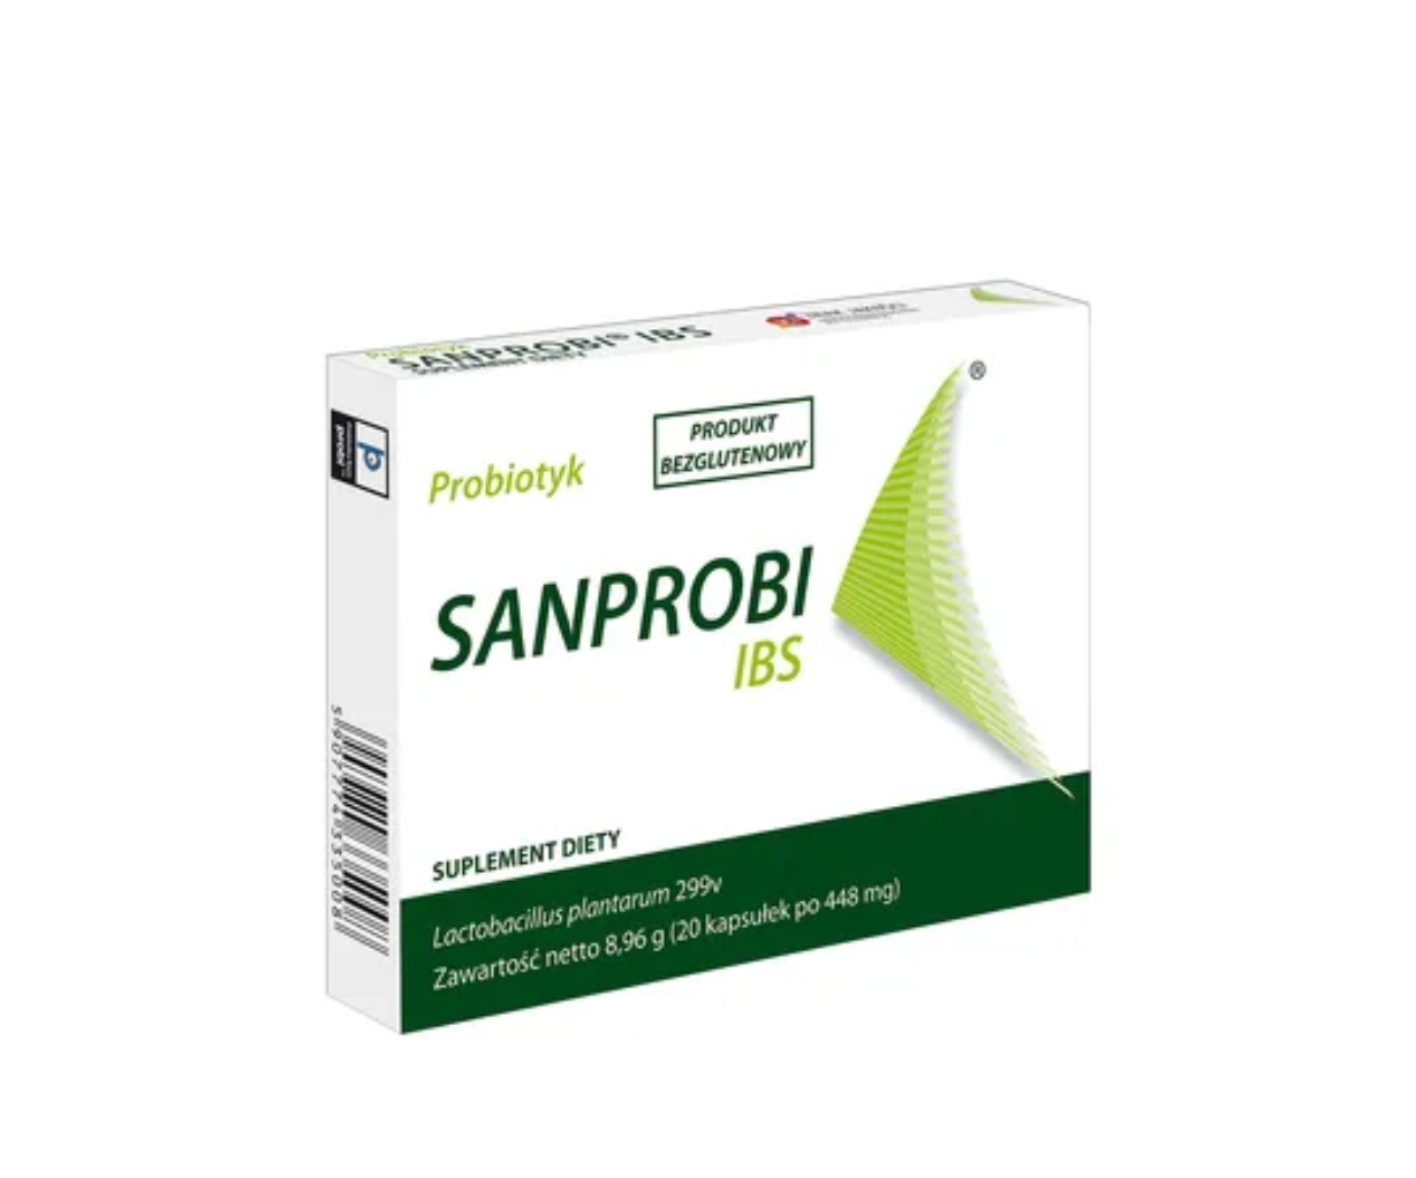 Sanprobi IBS, probiotic dietary supplement